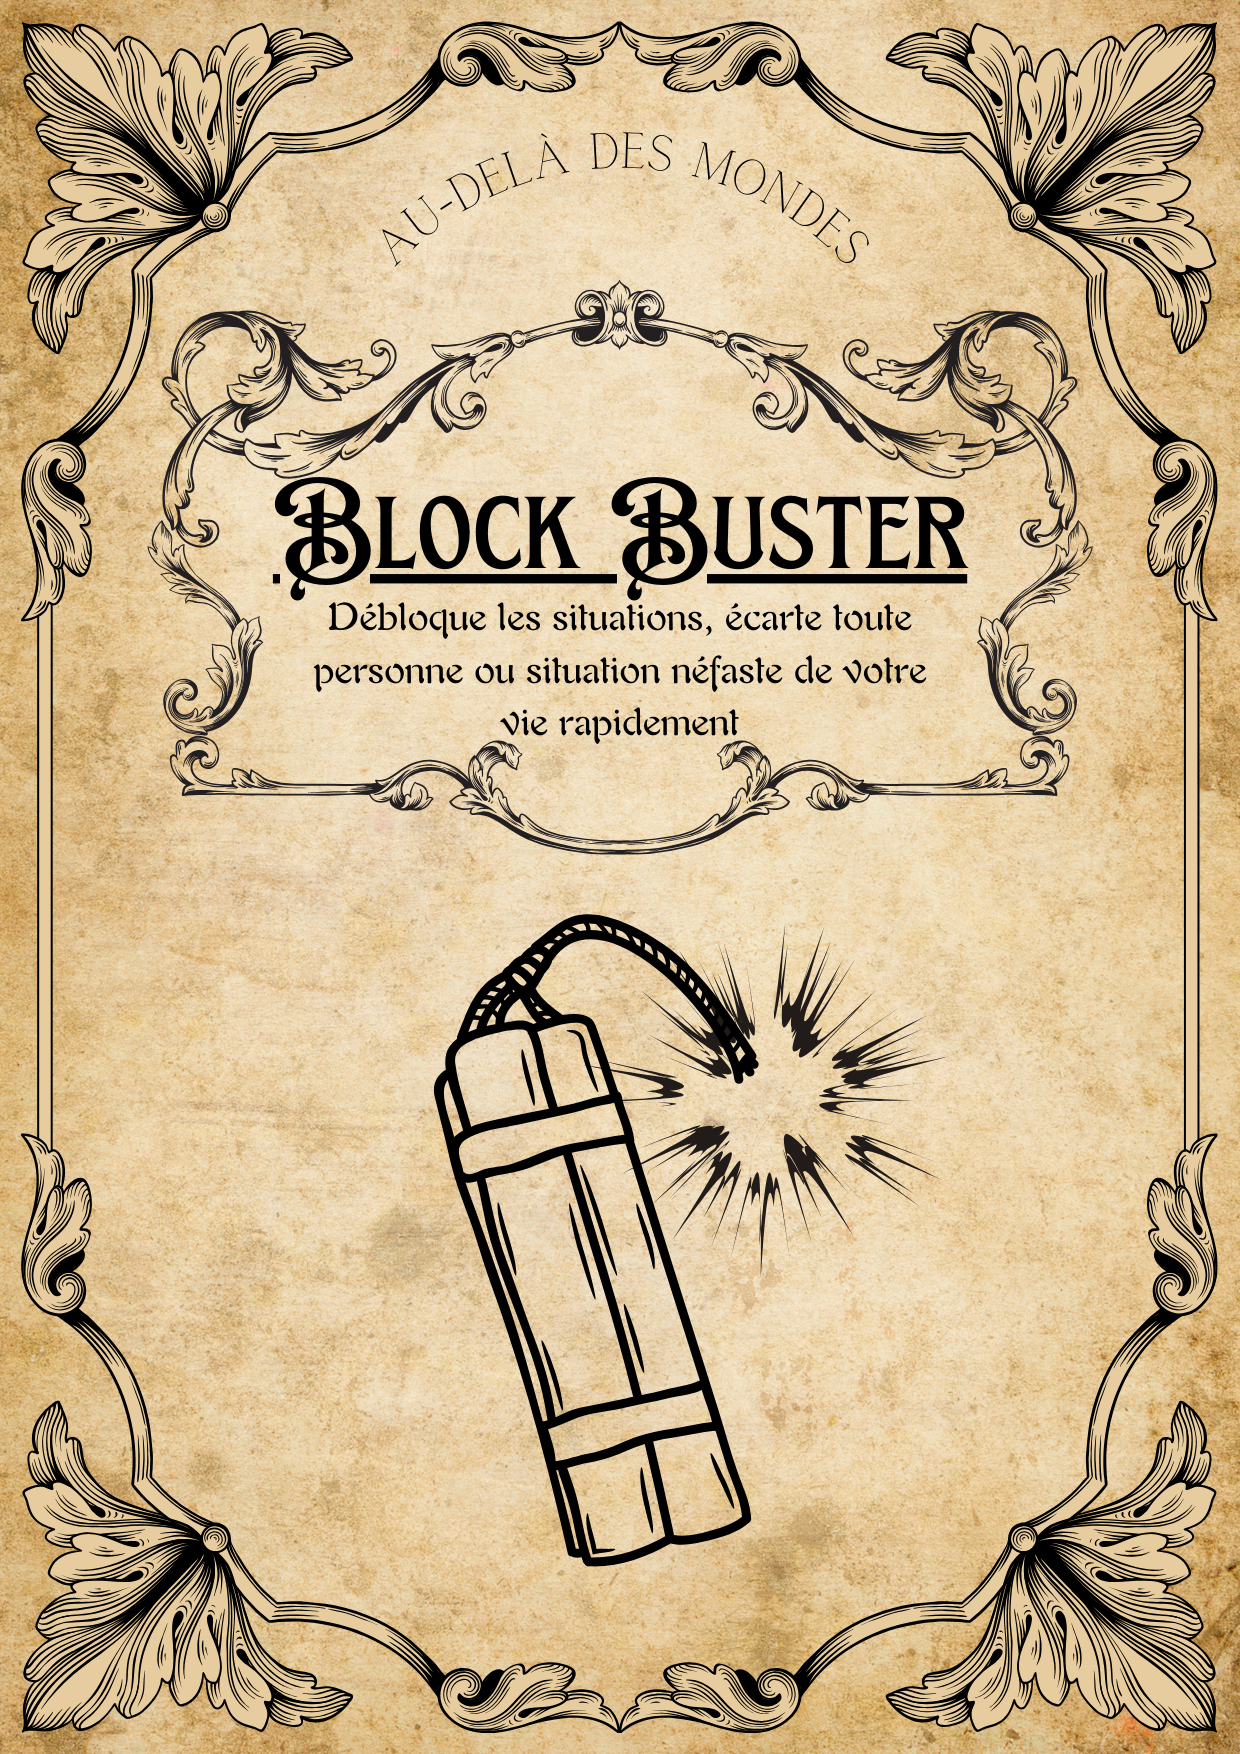 Block buster